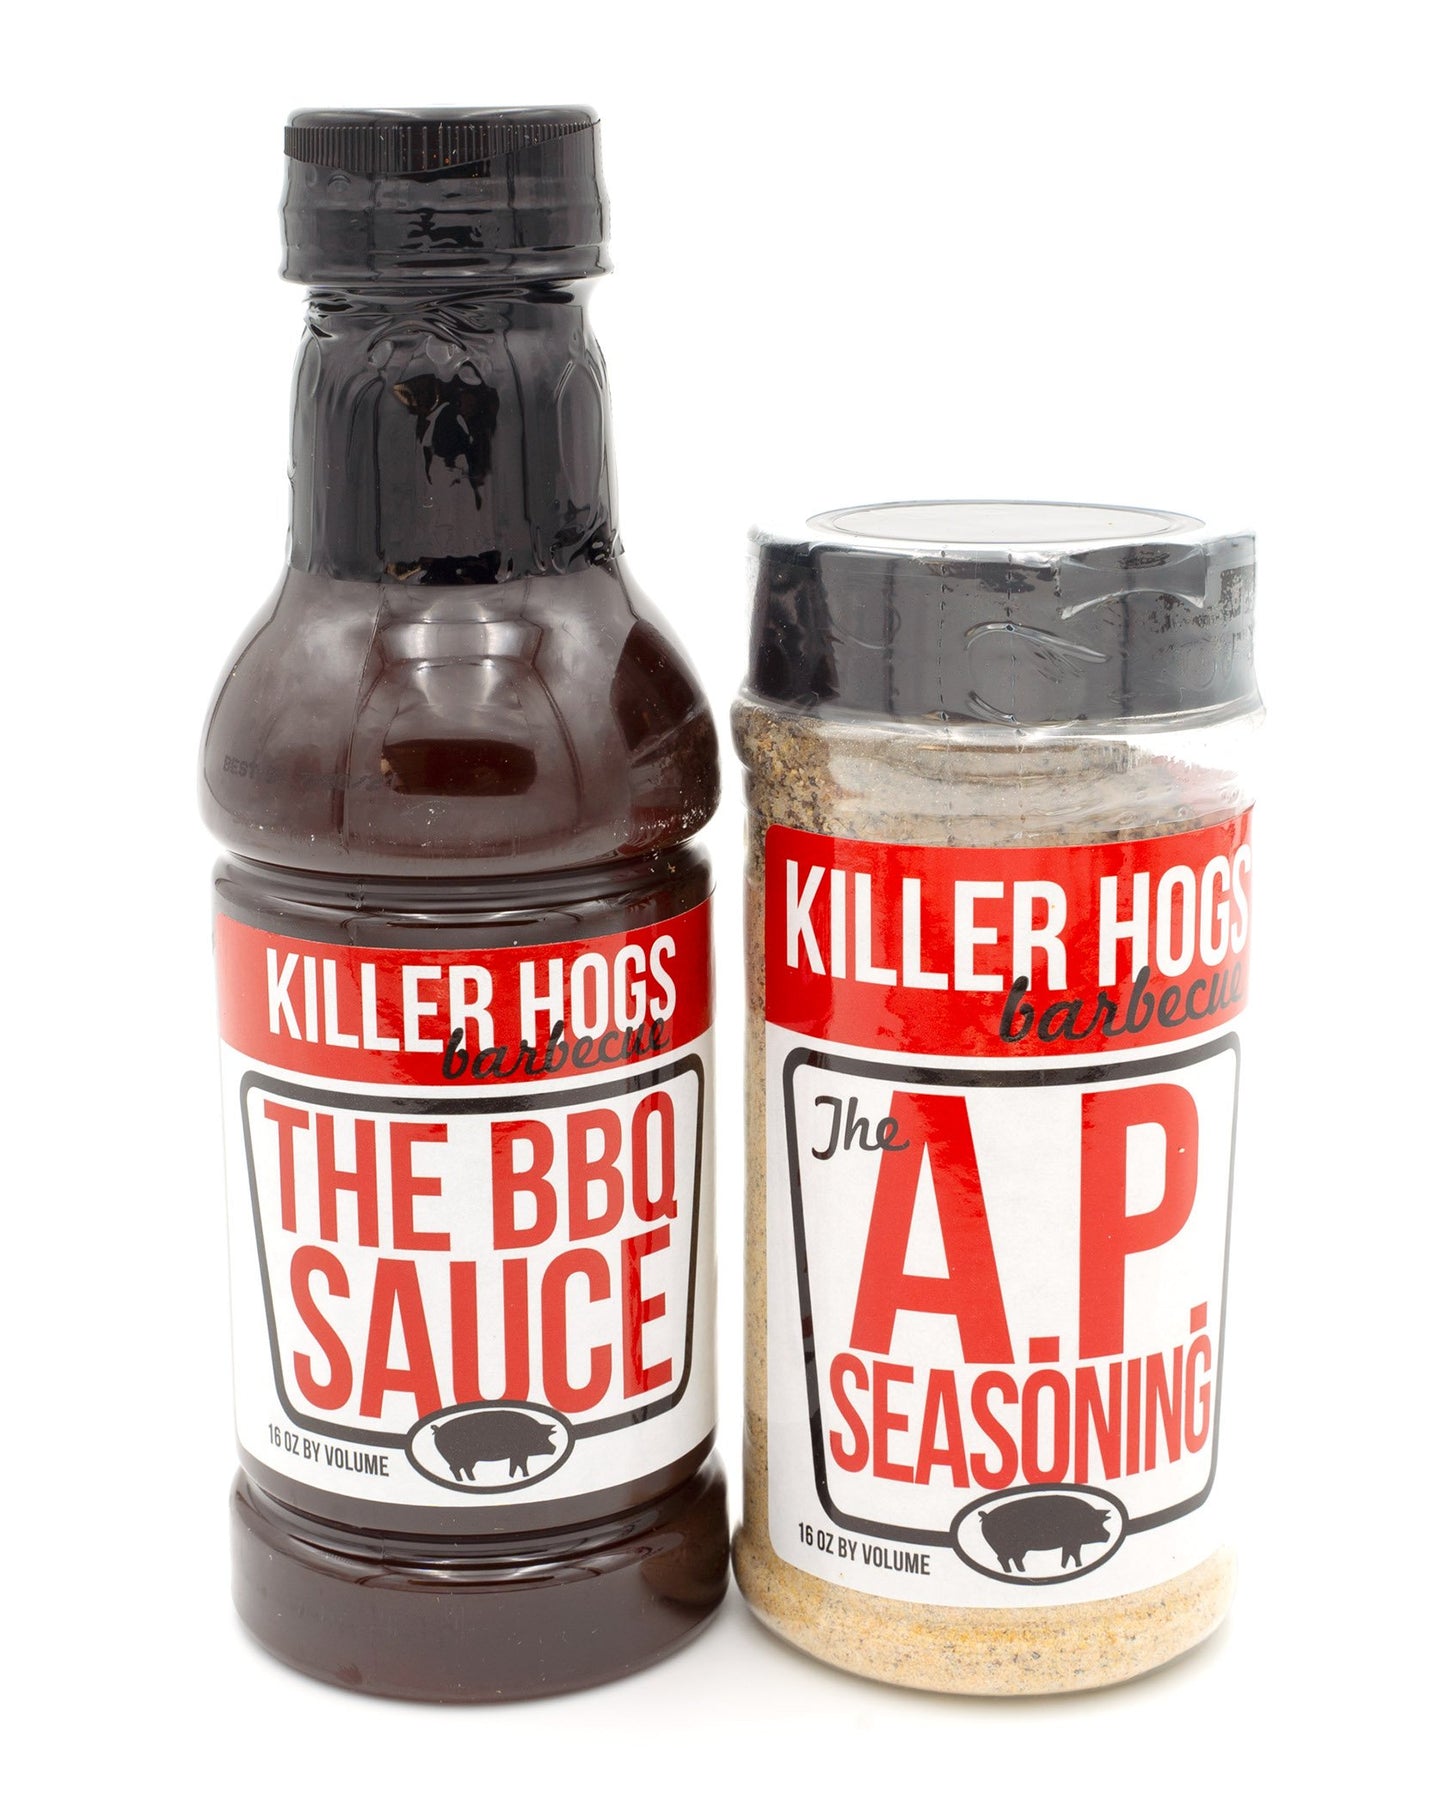 Killer Hogs - 2 Pack (BBQ Sauce & A.P. Seasoning)